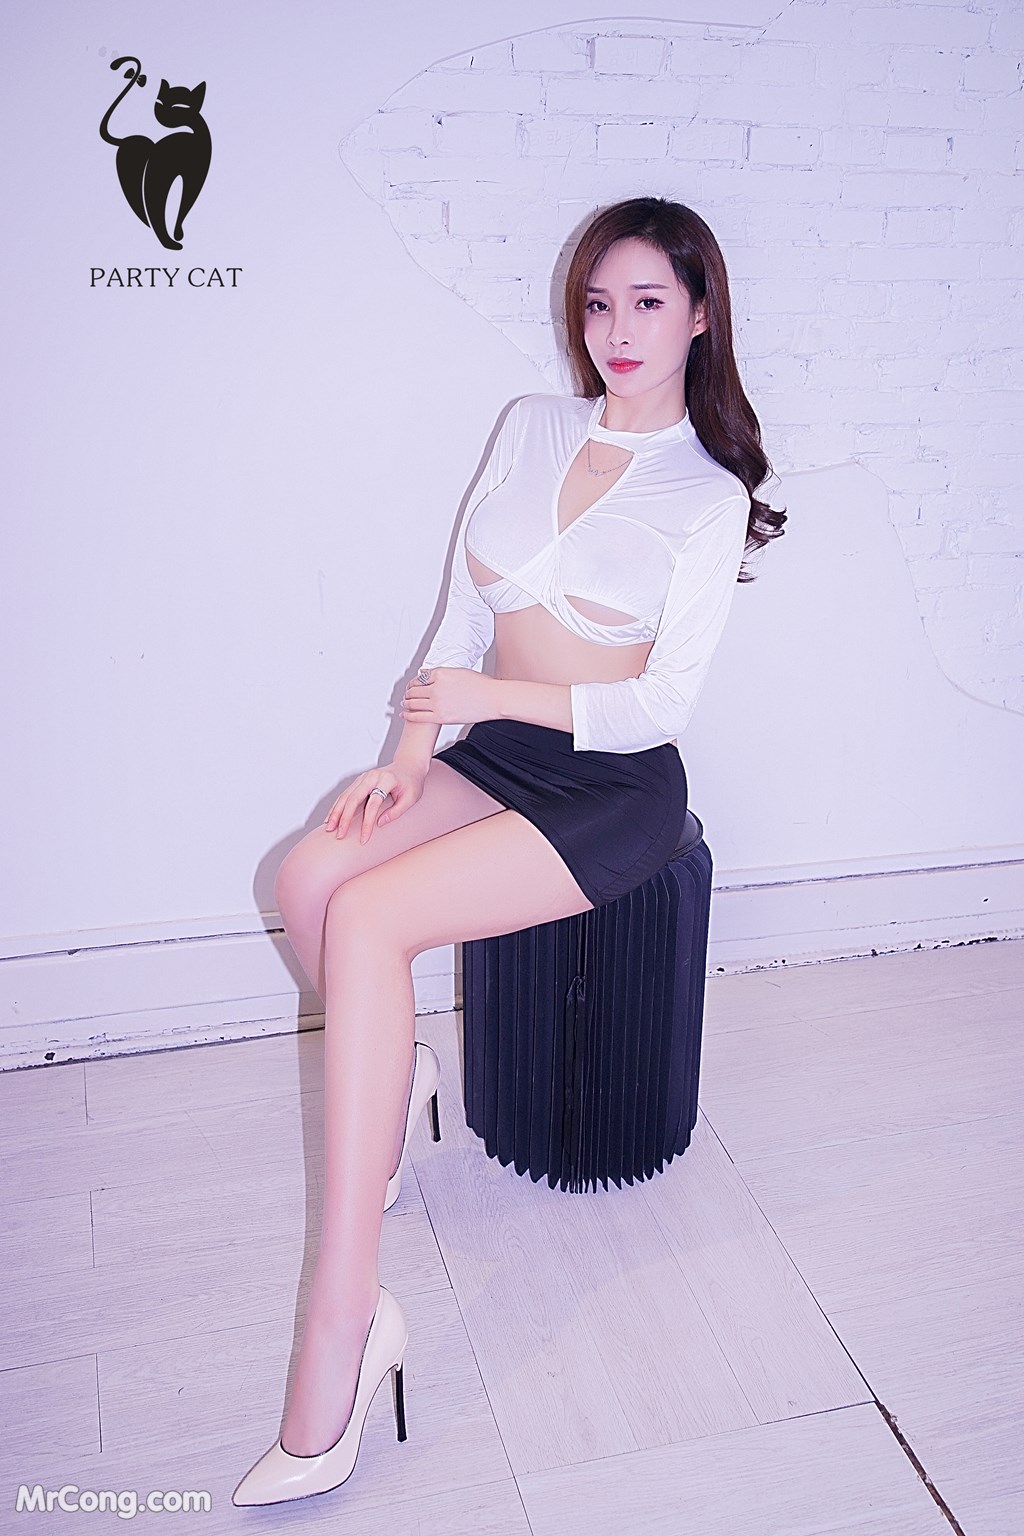 PartyCat Vol.065: Model 土肥 圆 矮 挫 穷 (Tu Fei Yuan Ai Cuo Qiong) (50 photos) photo 3-1